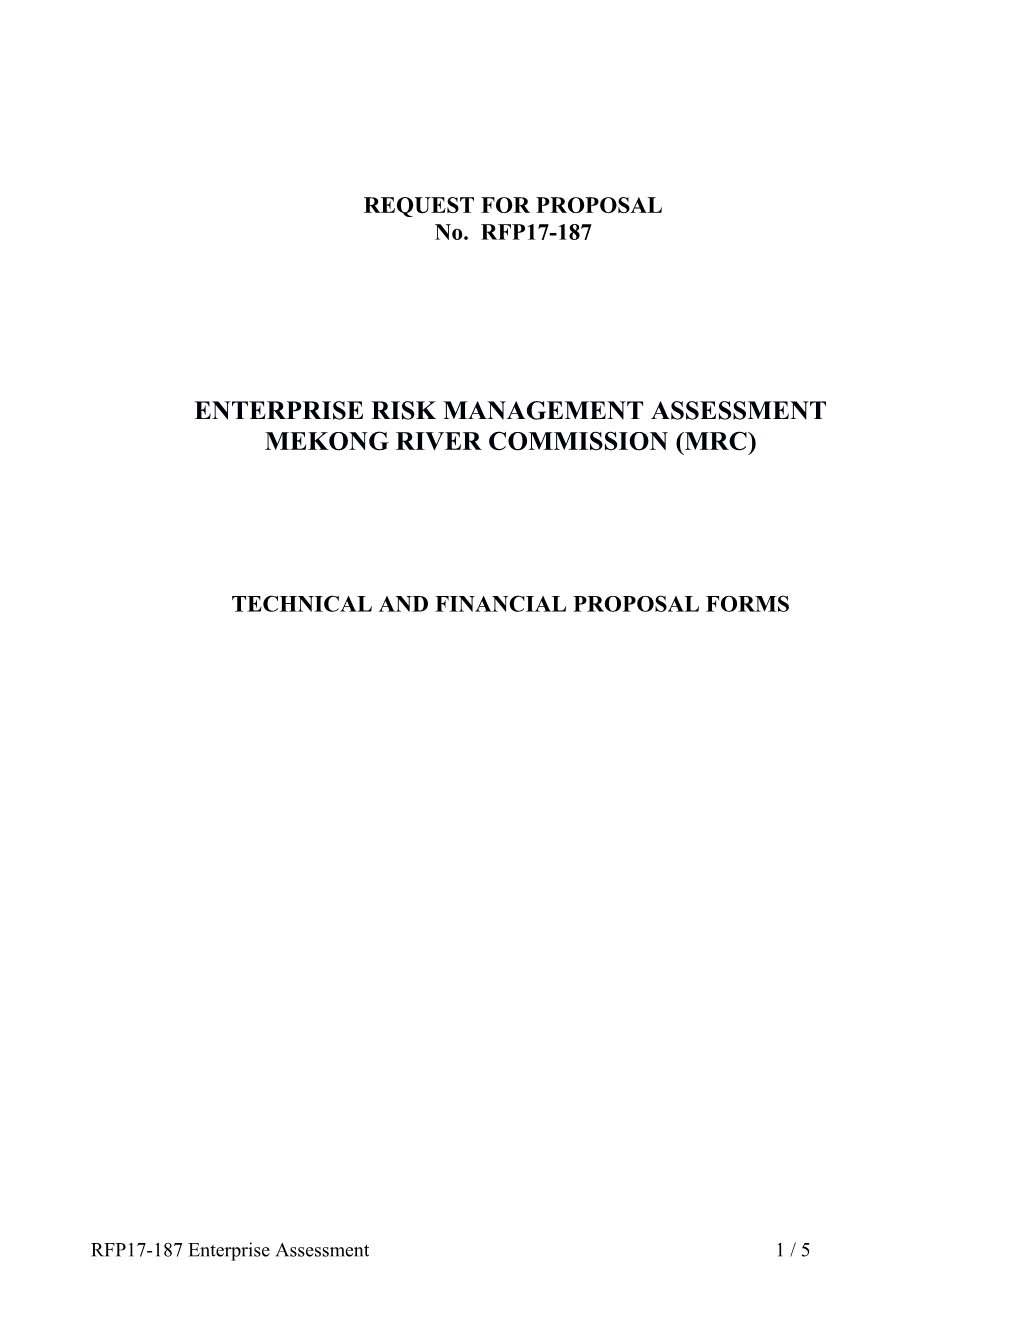 Enterprise Risk Management Assessment